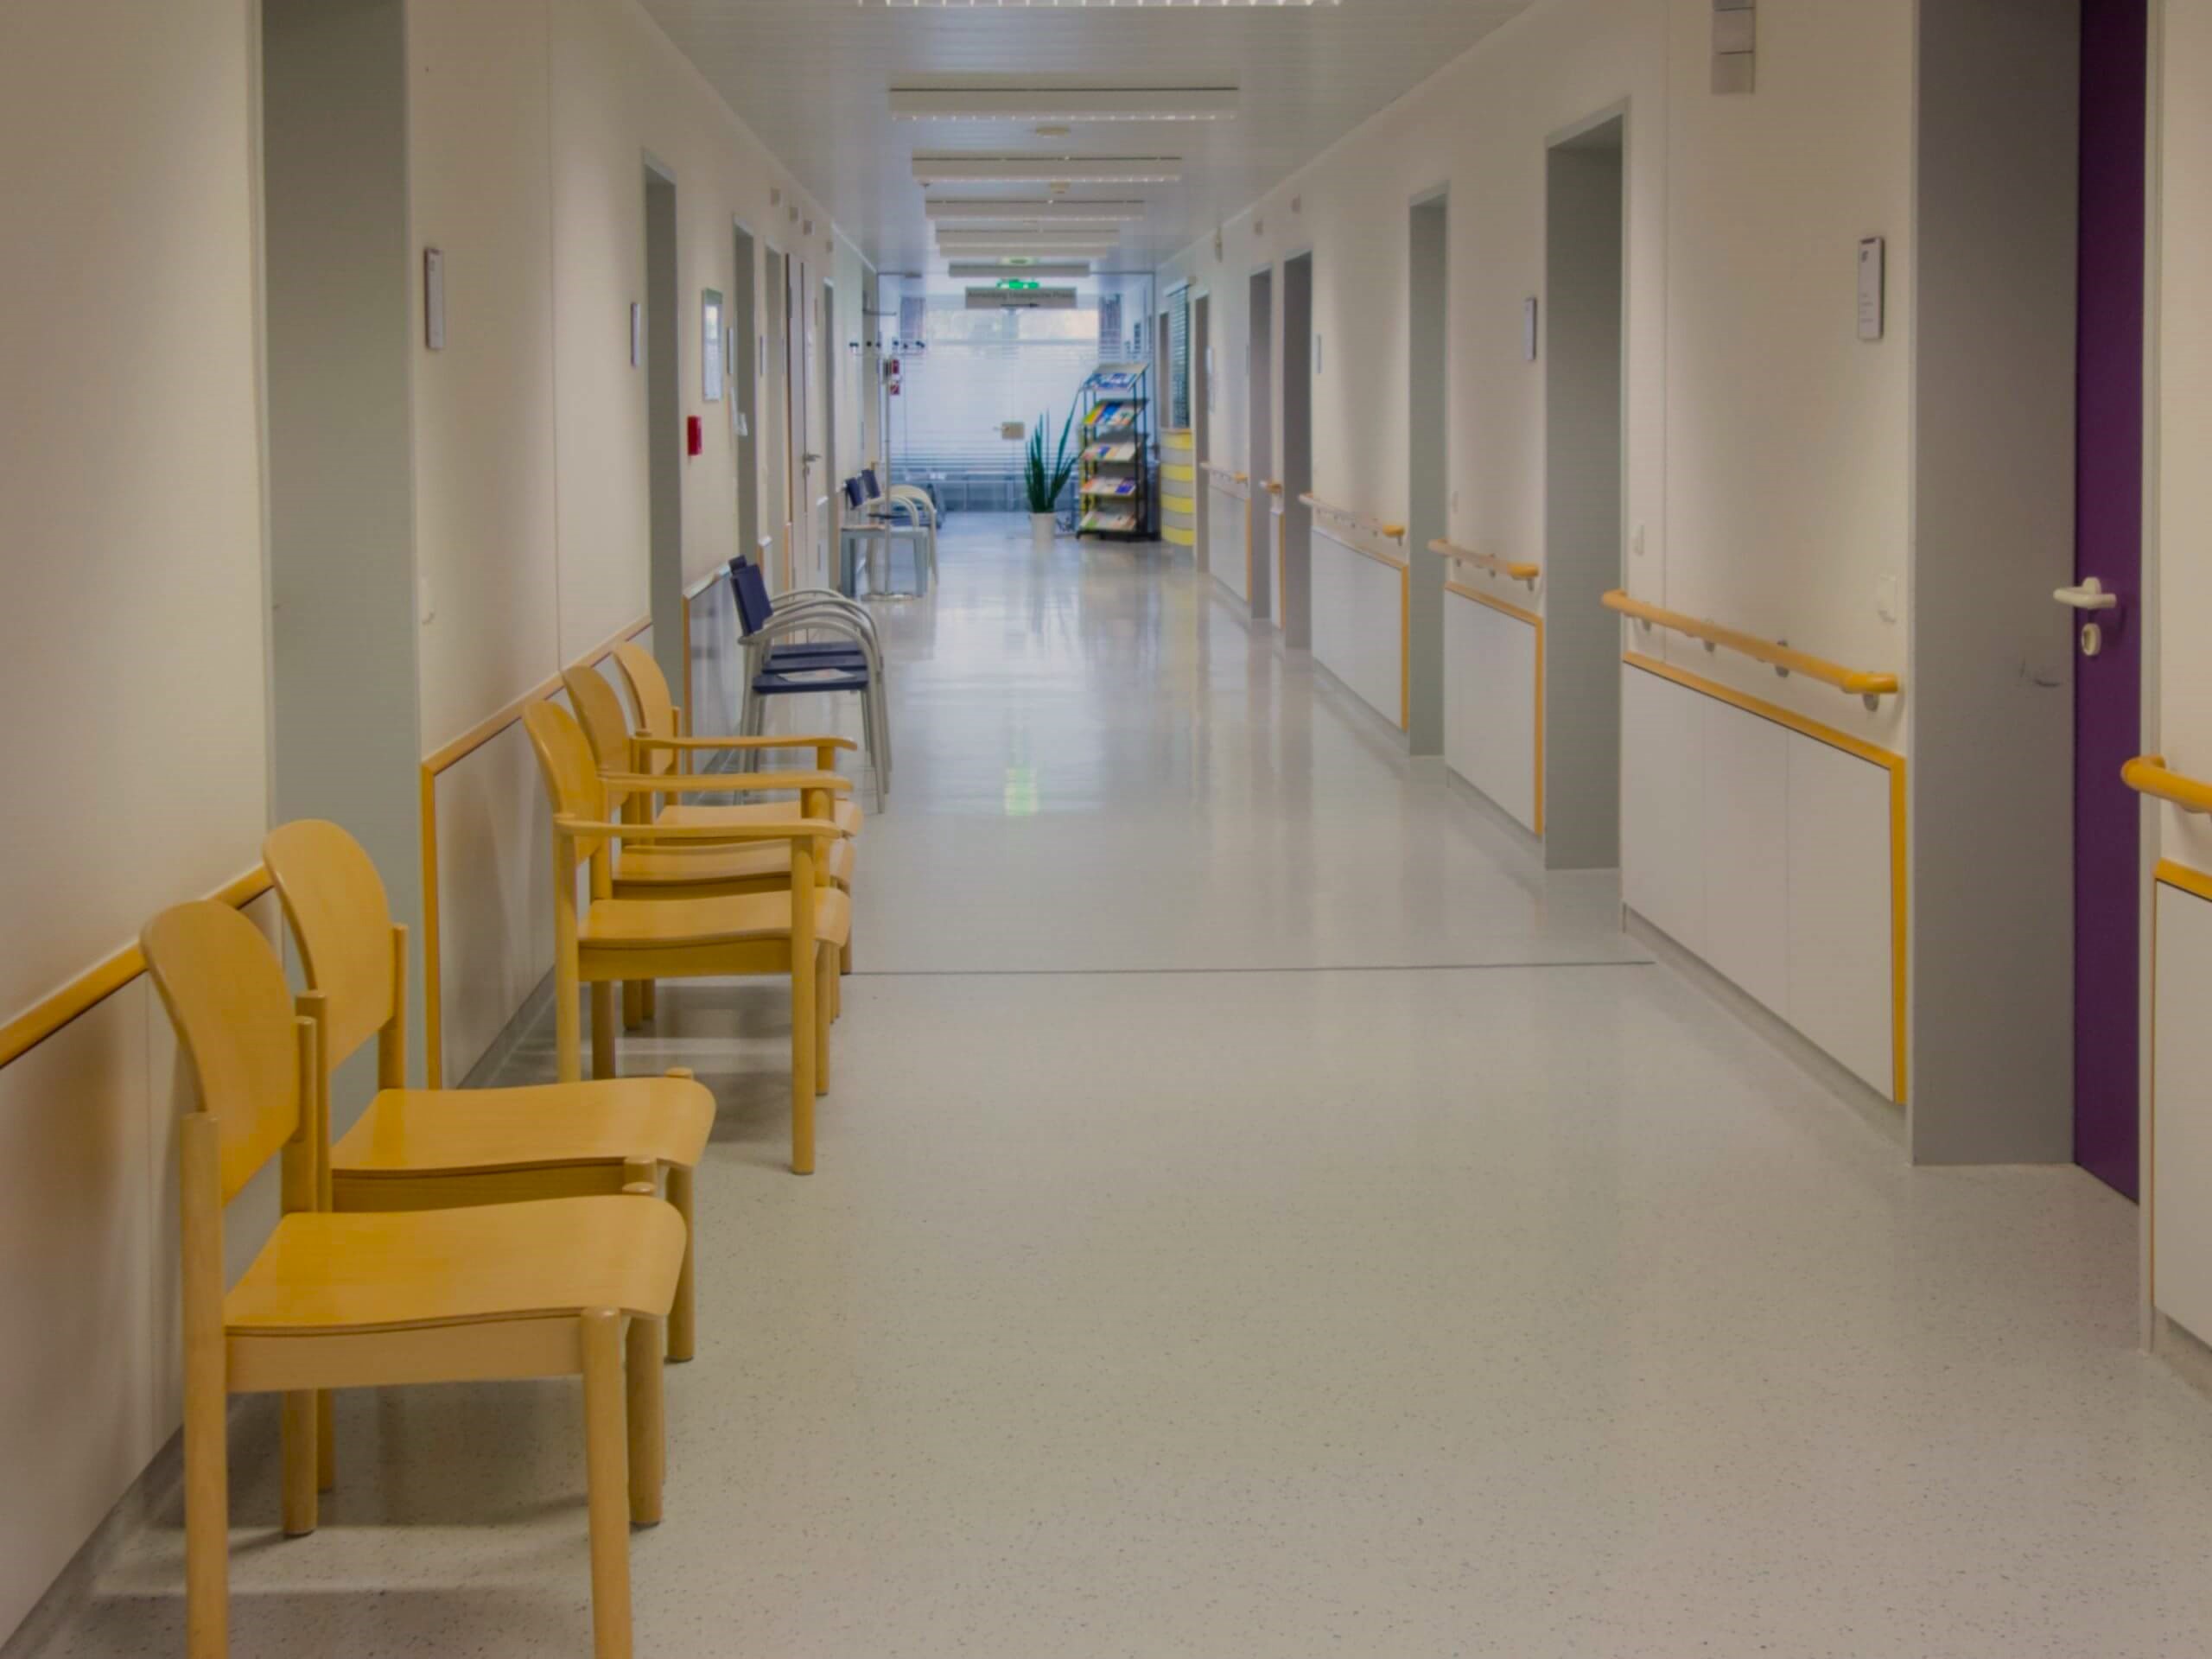 View of a hospital corridor